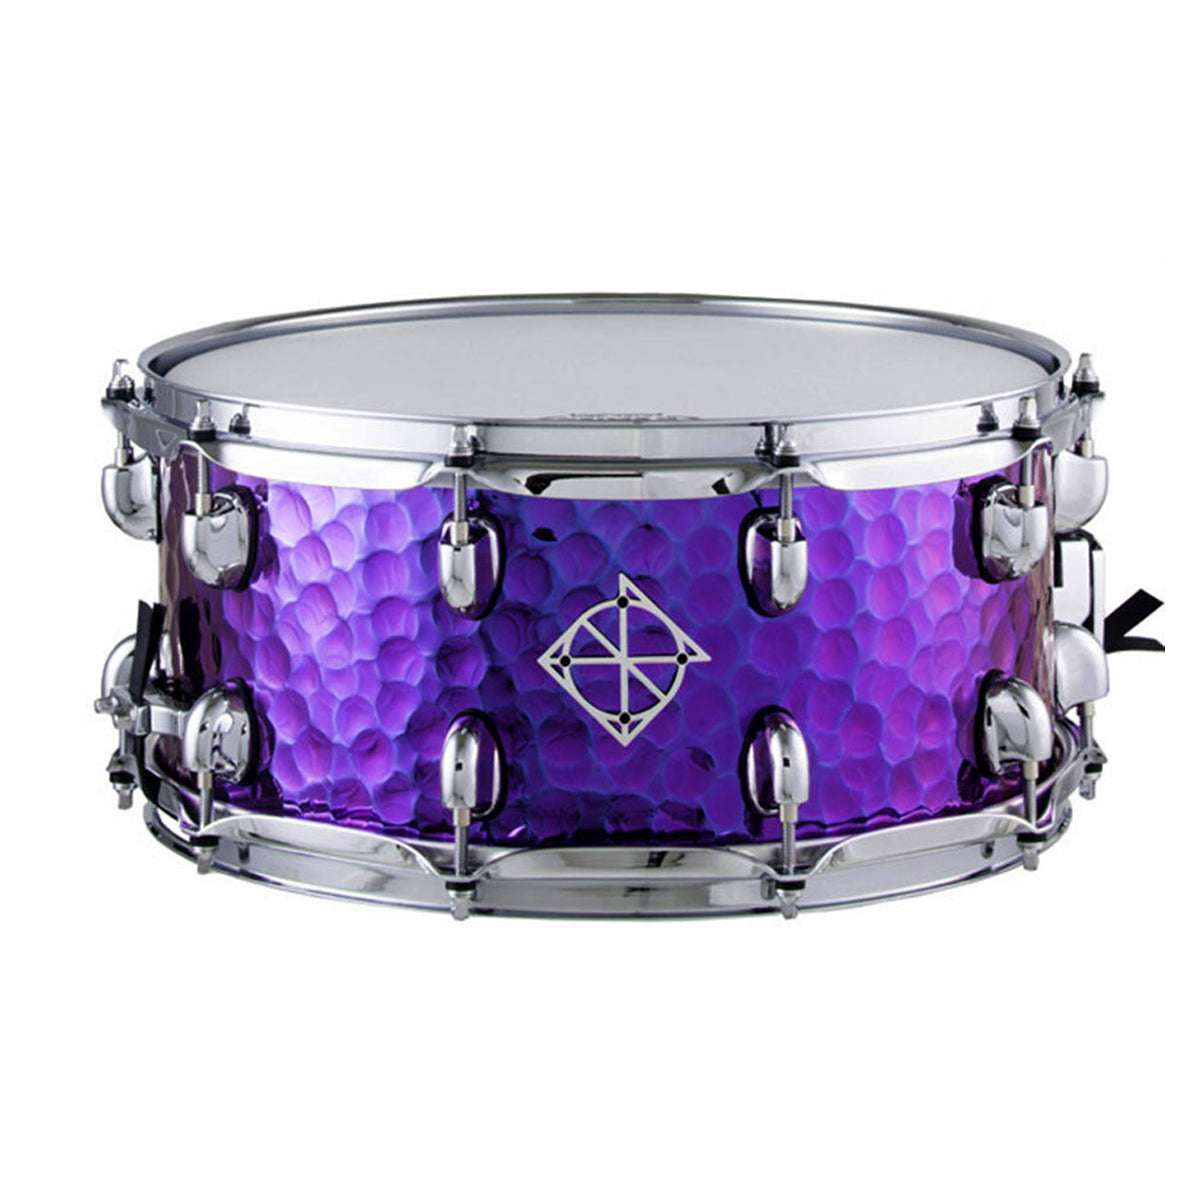 Dixon Cornerstone Series Snare Drum 6.5x14inch - PDSCST654PTS